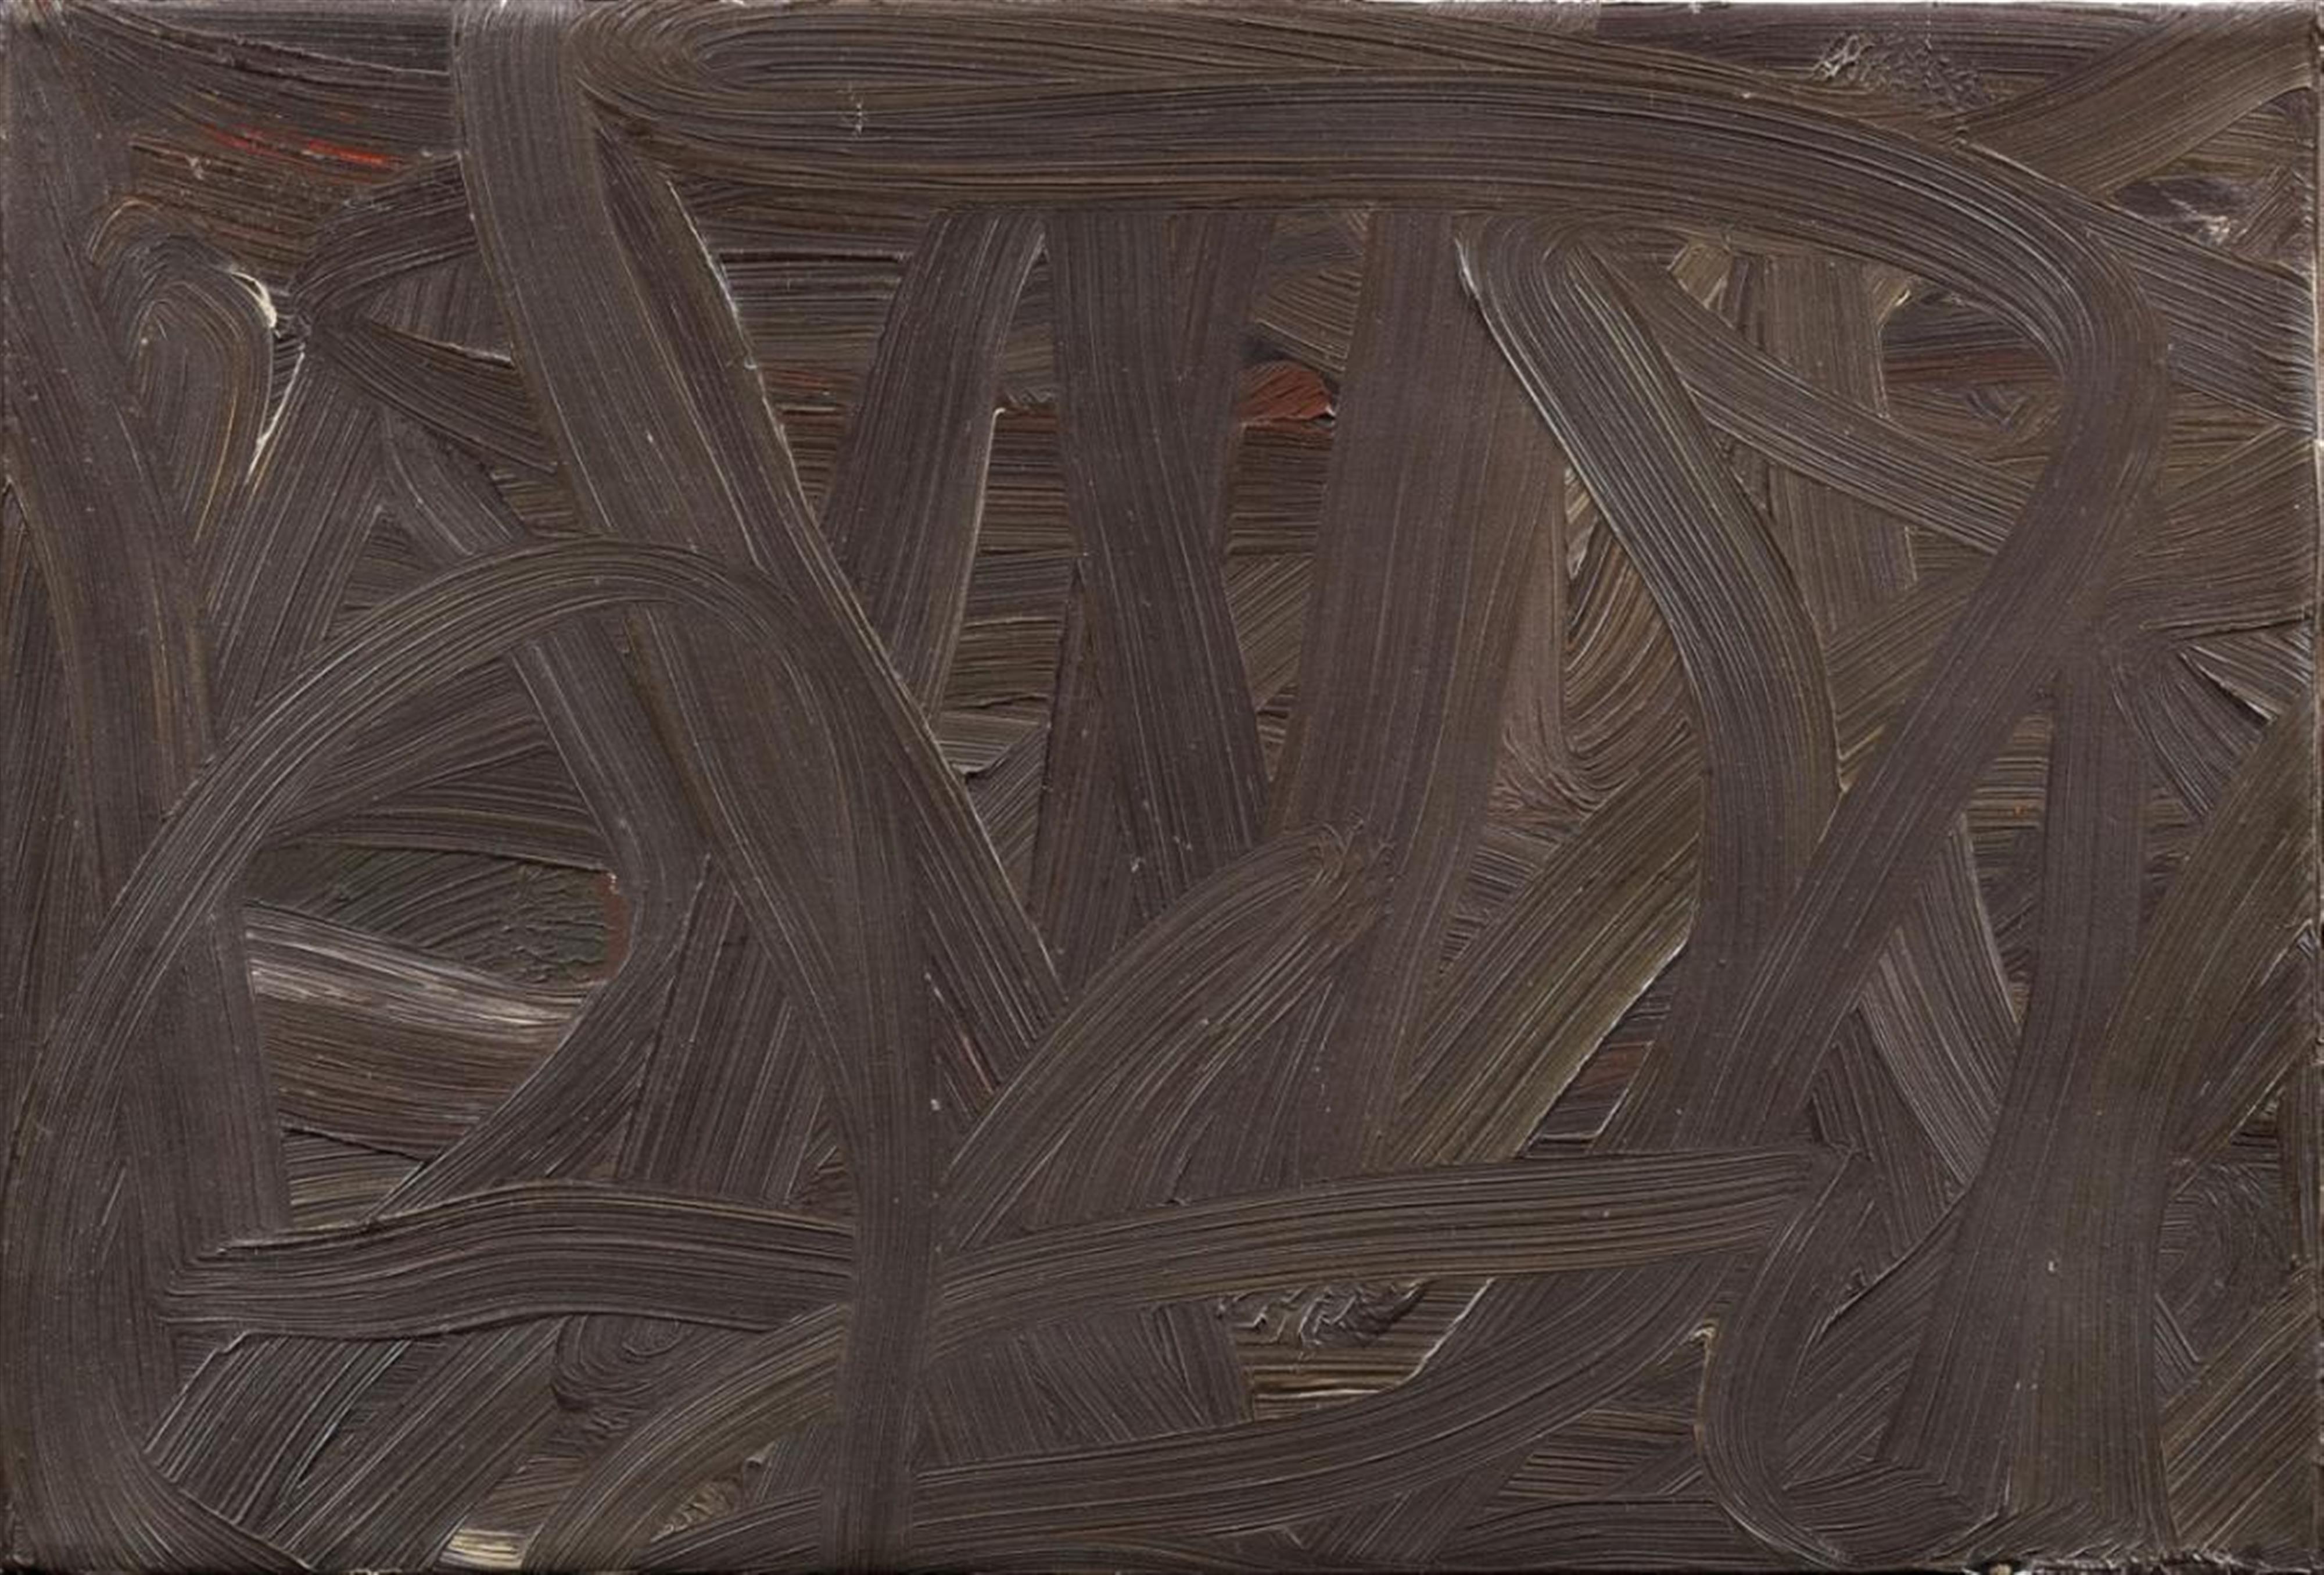 Gerhard Richter - Vermalung (Braun) - image-1